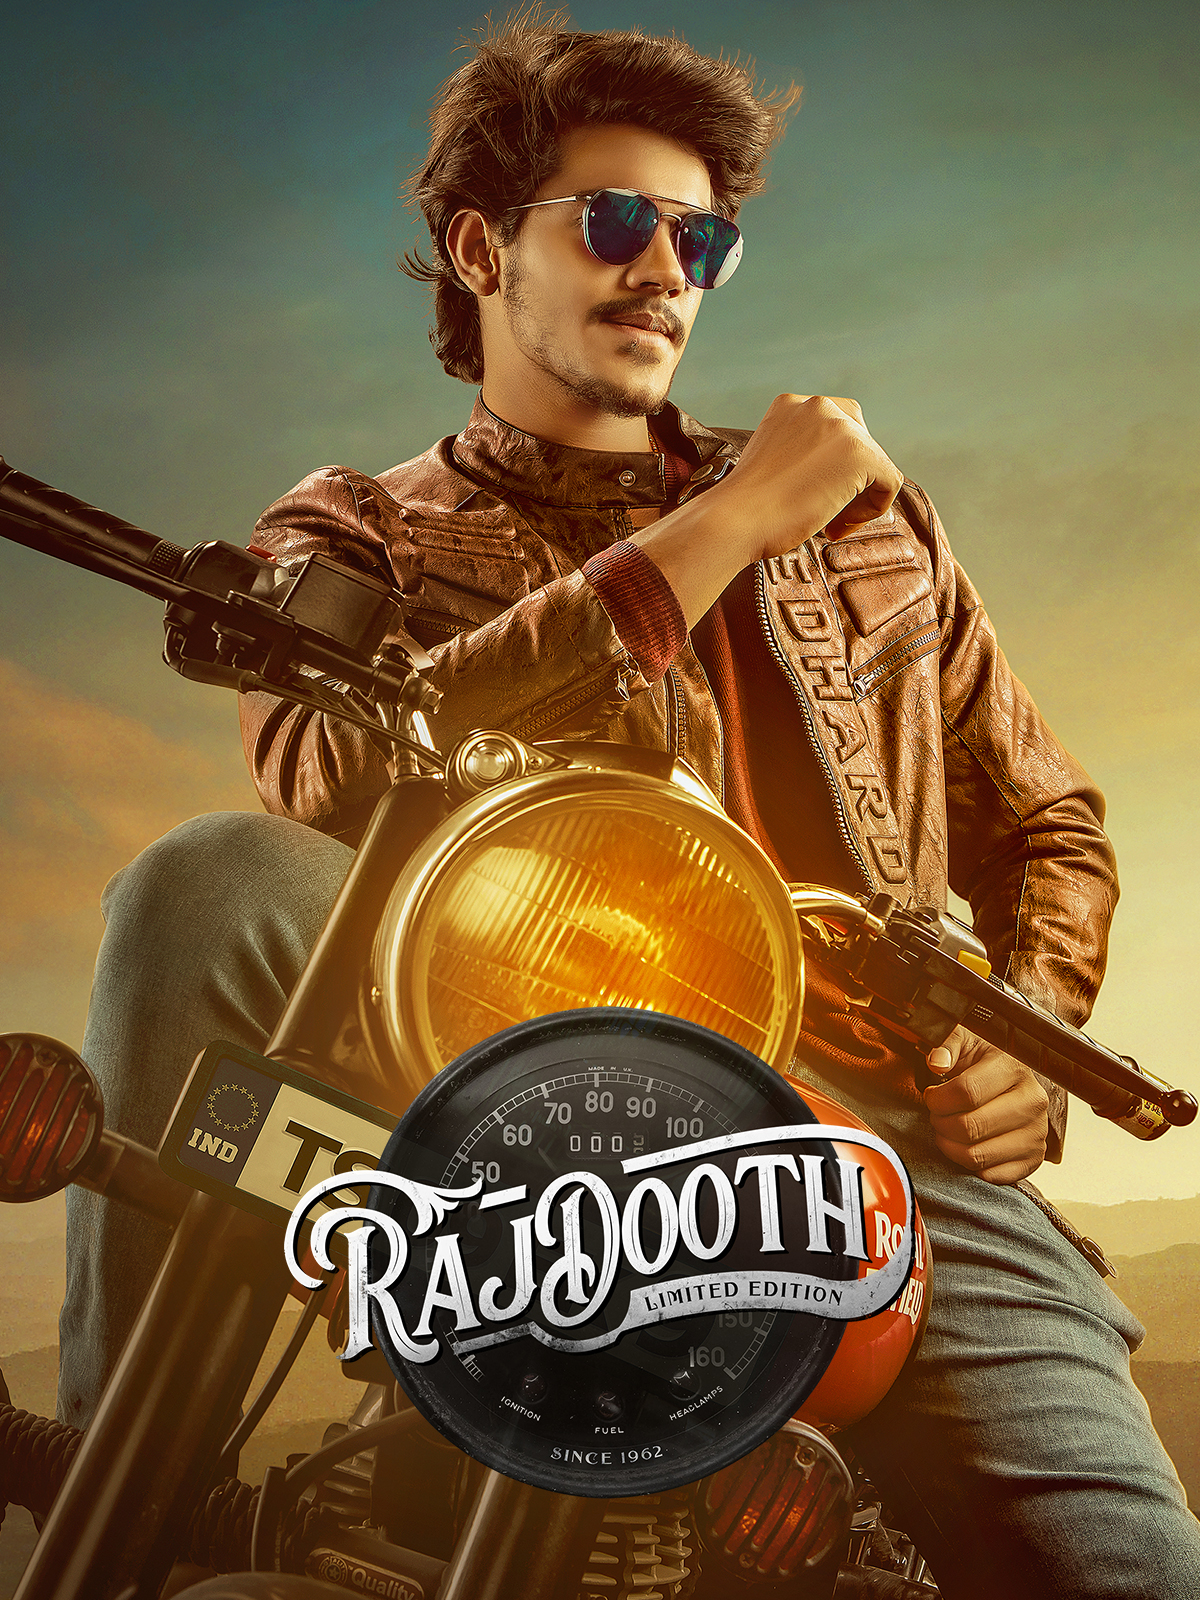 Rajdhooth